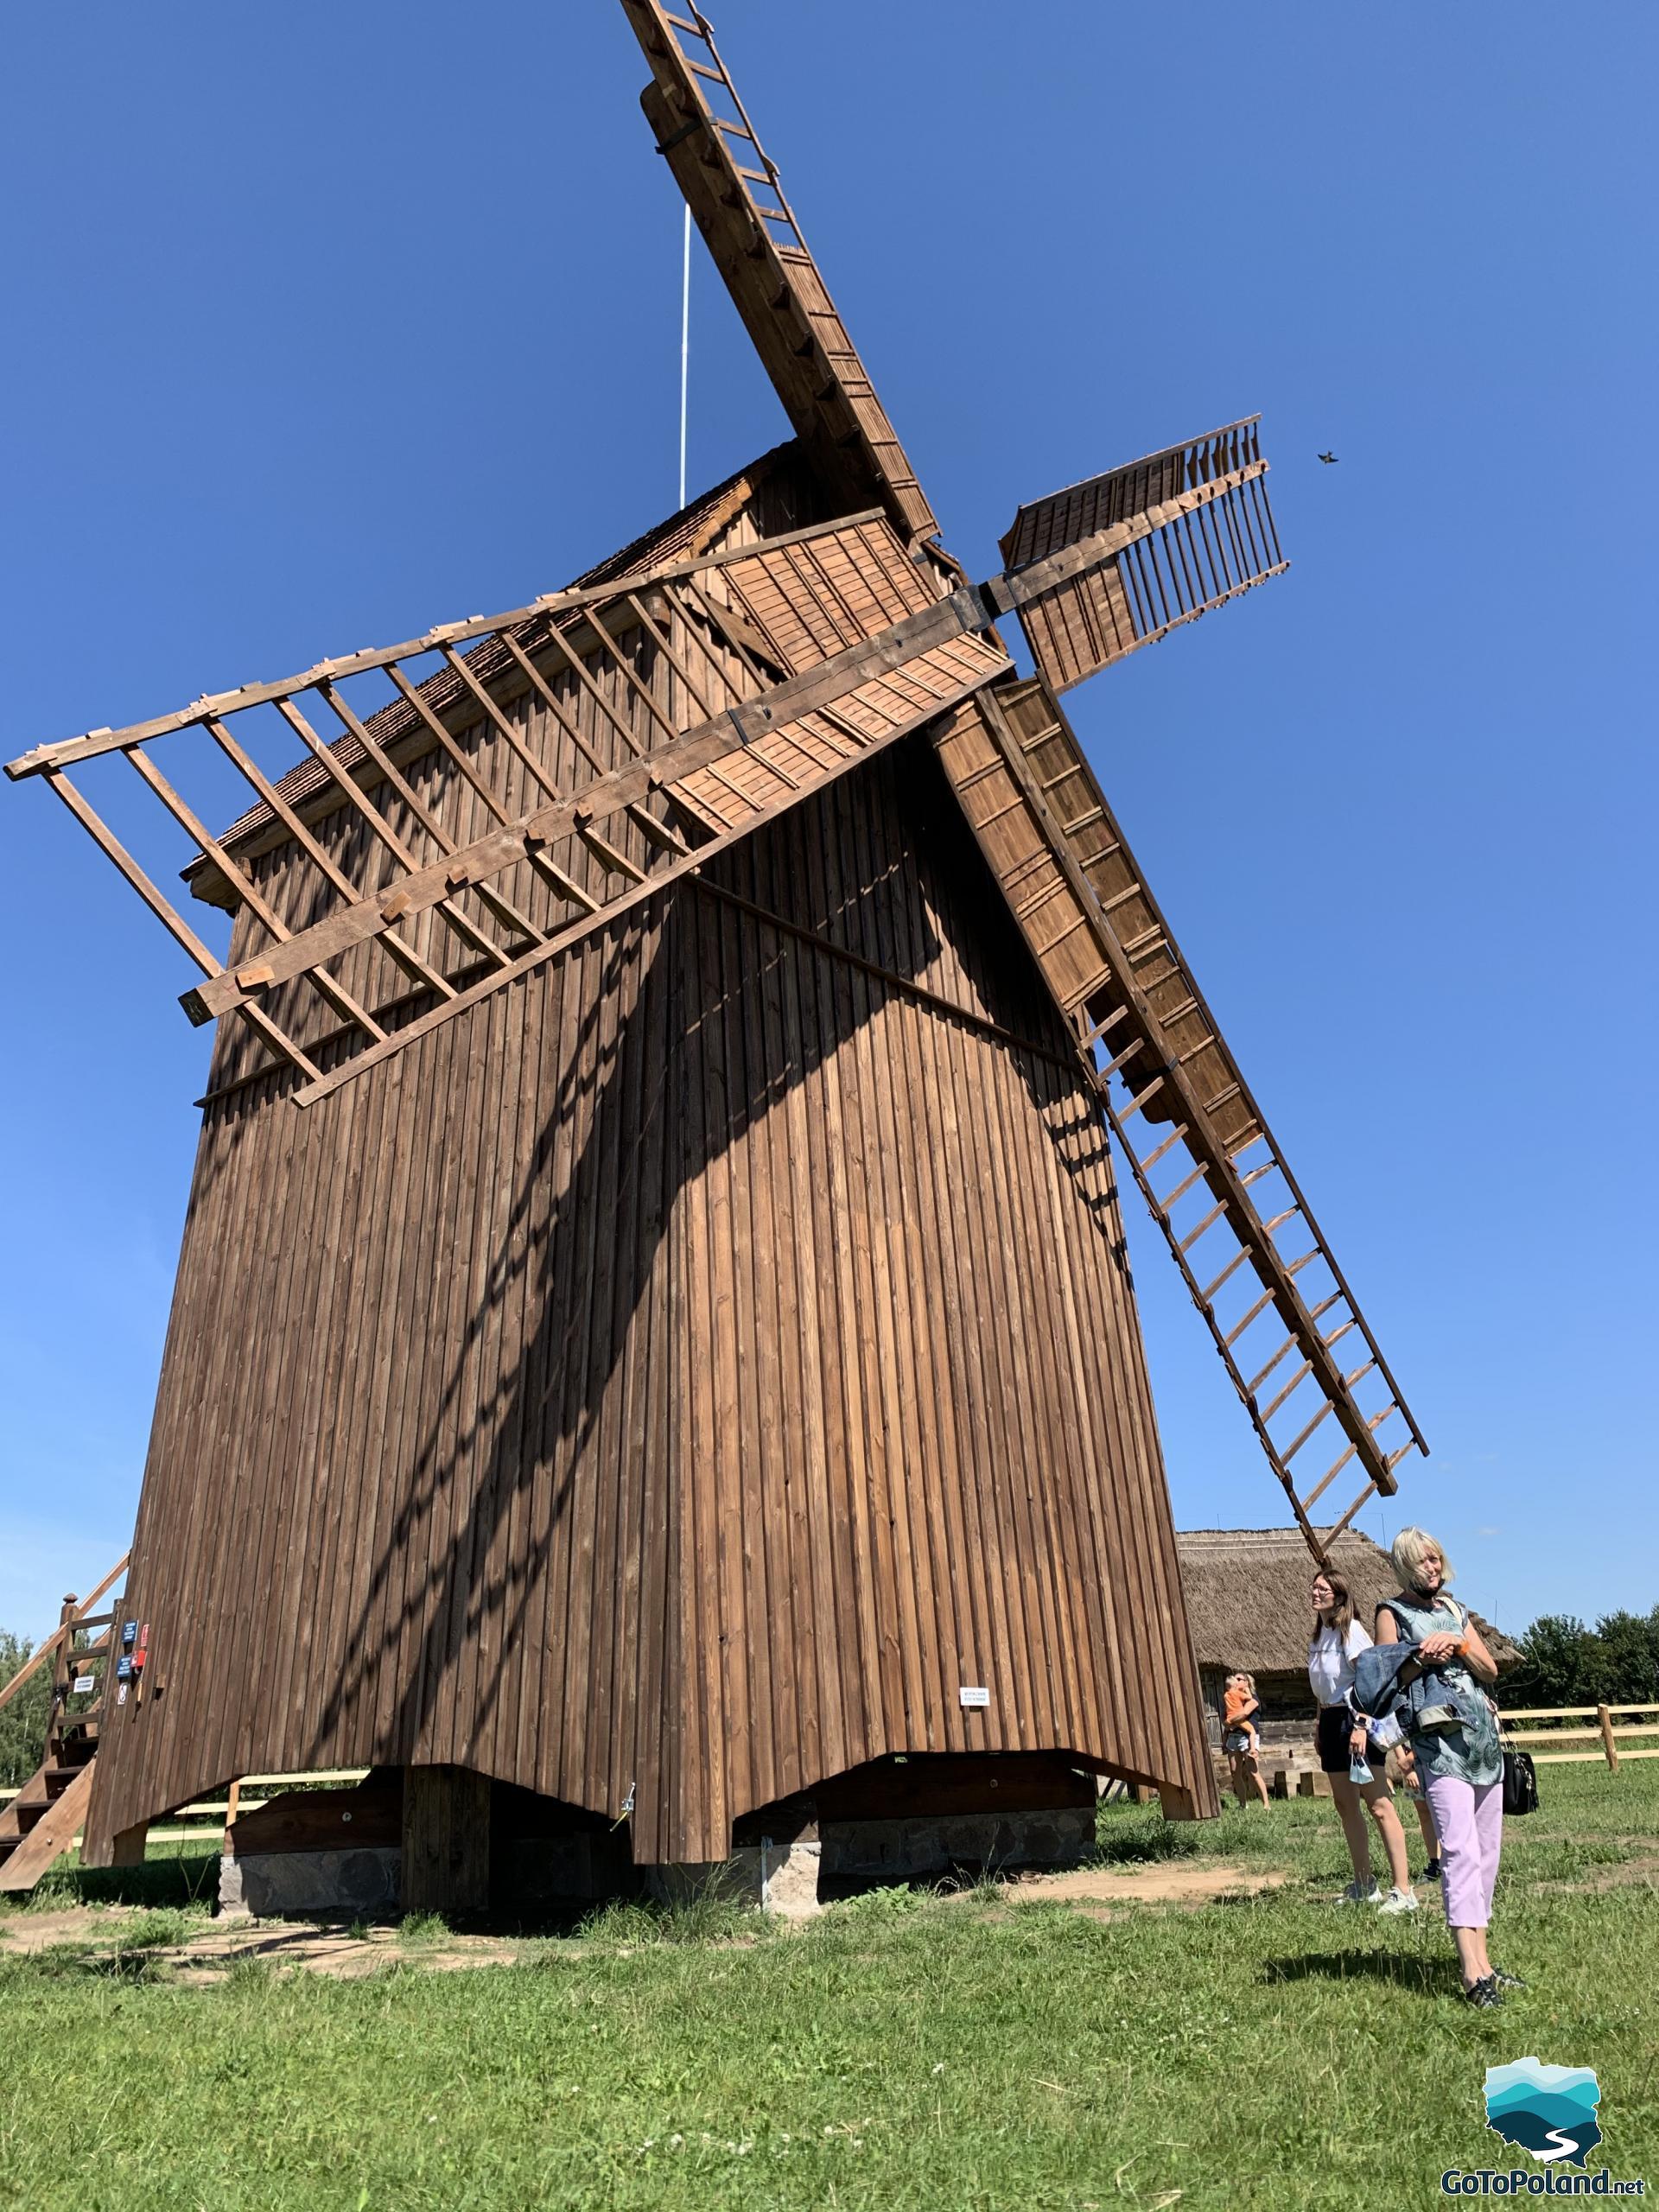 a wooden windmill